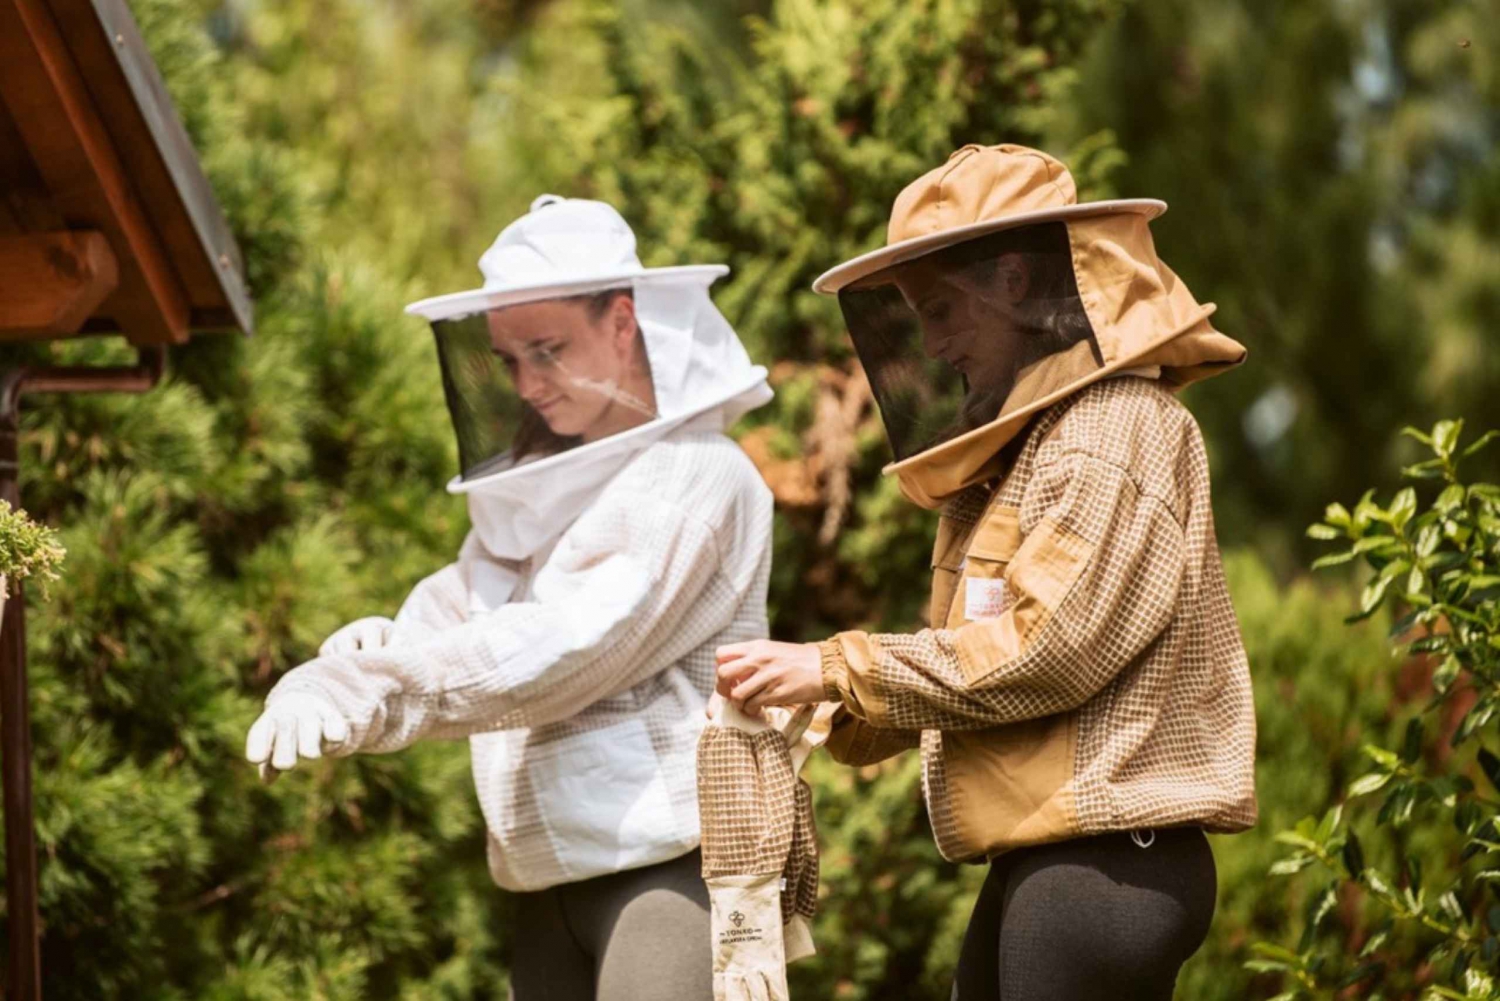 Ljubljanasta: Wild About Bees